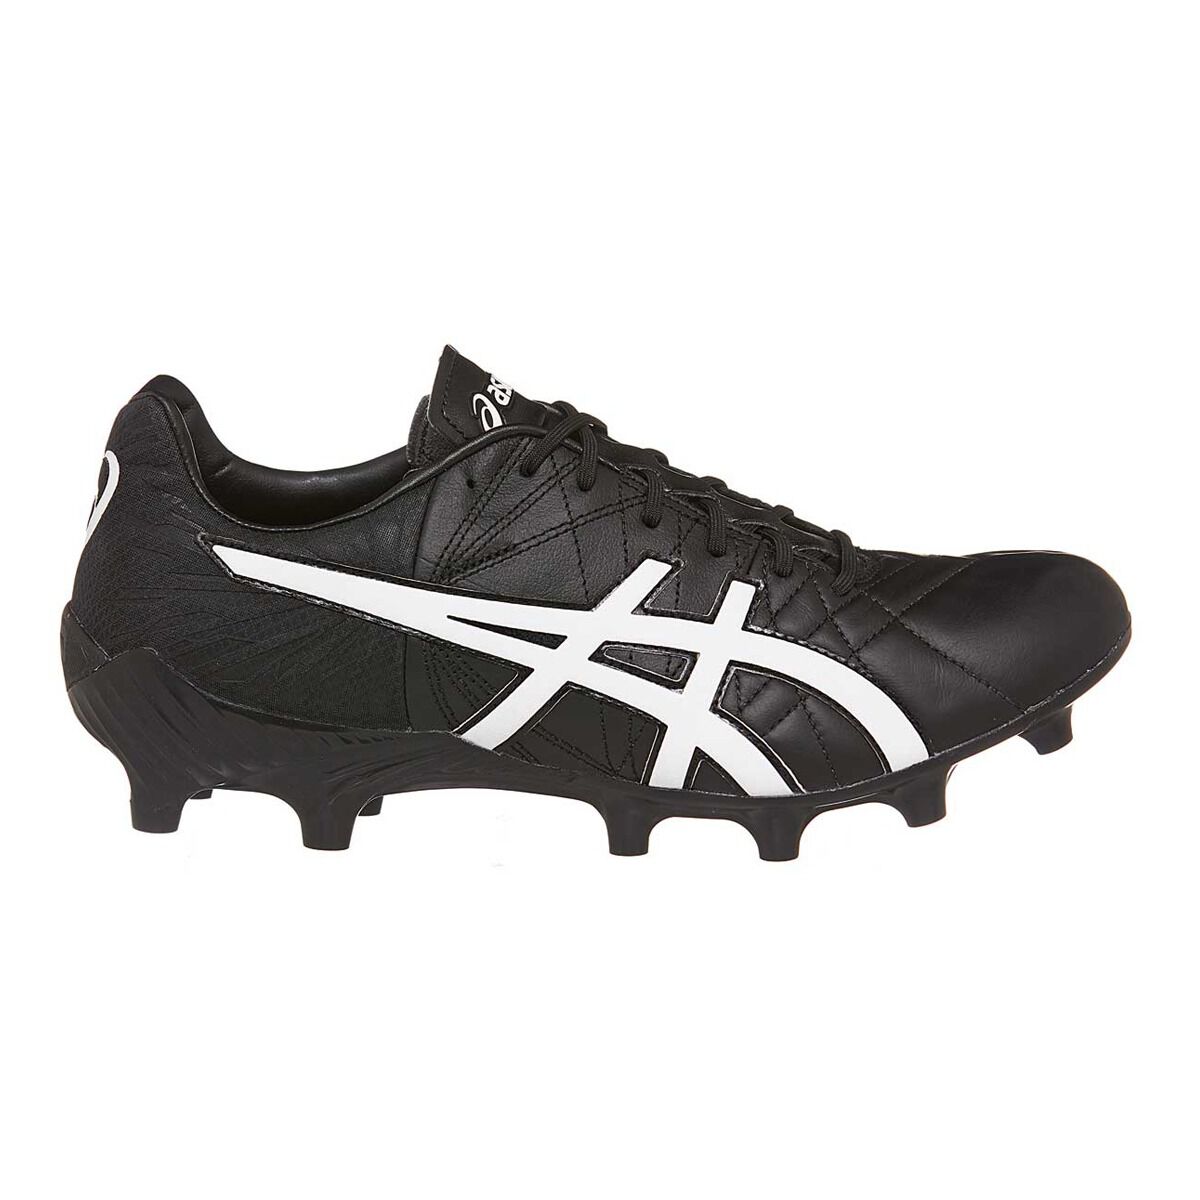 all black asics football boots